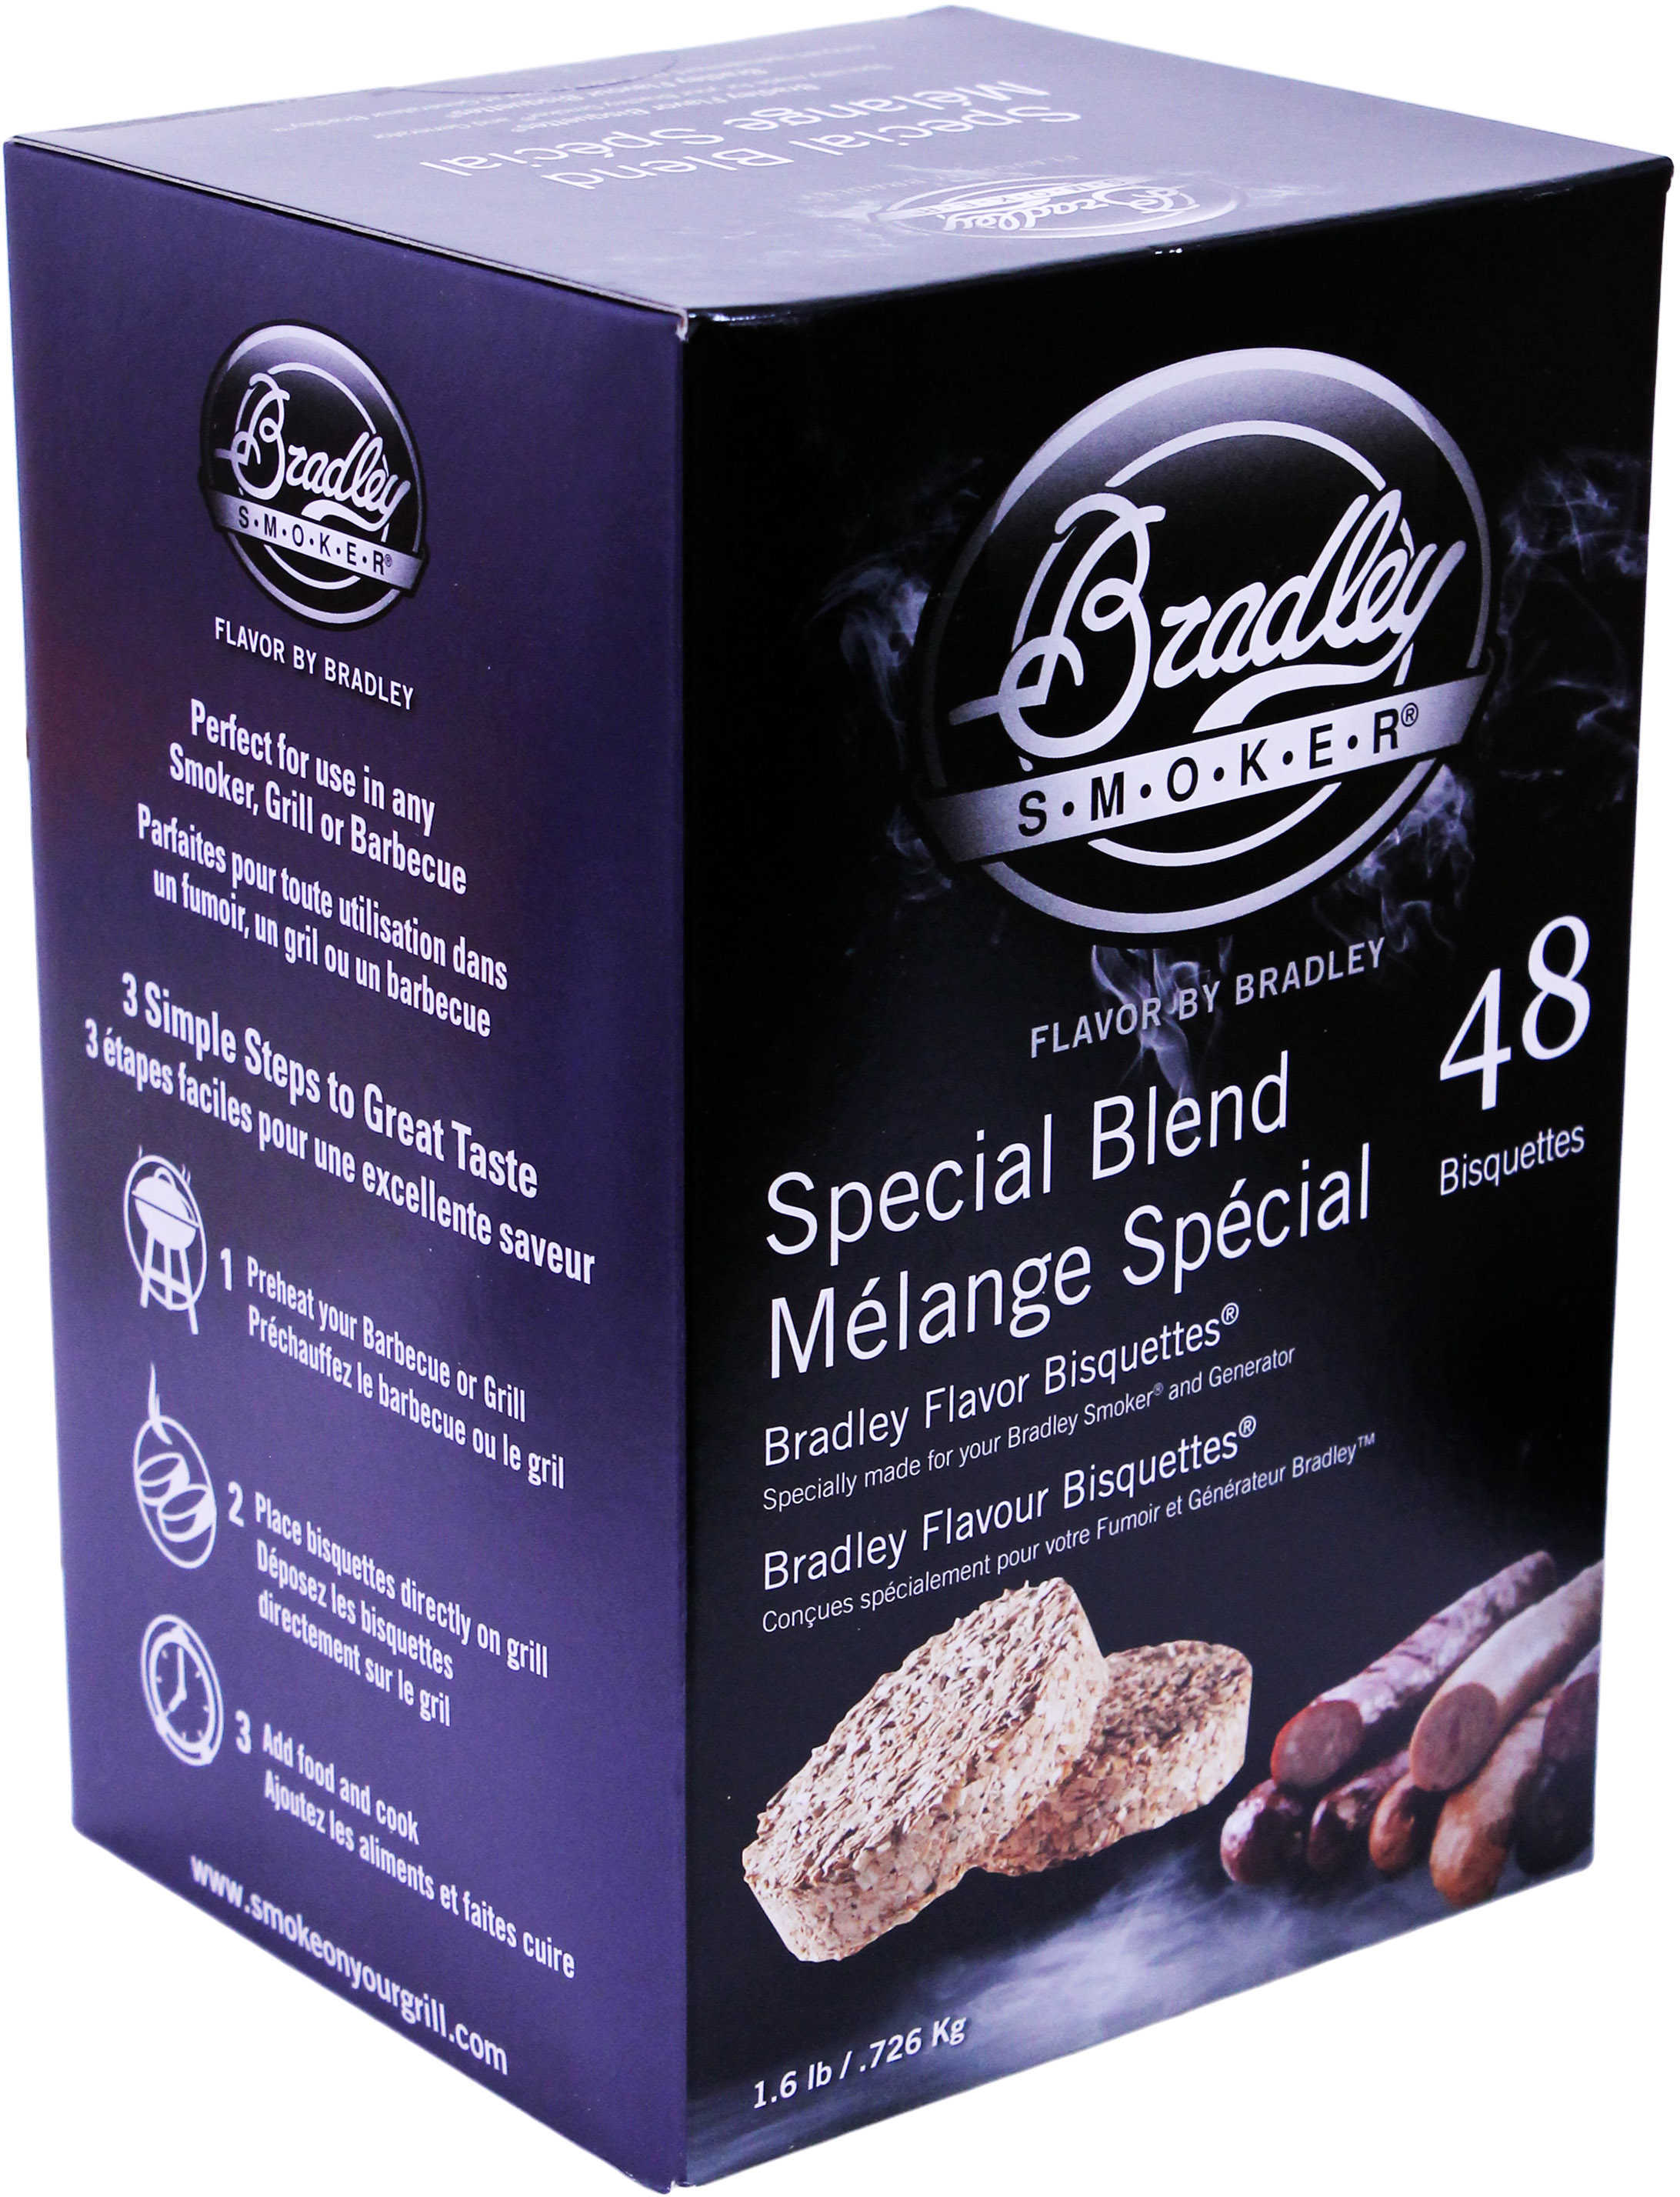 Bradley Technologies Smoker Bisquettes Special Blend (48 Pack) BTSB48